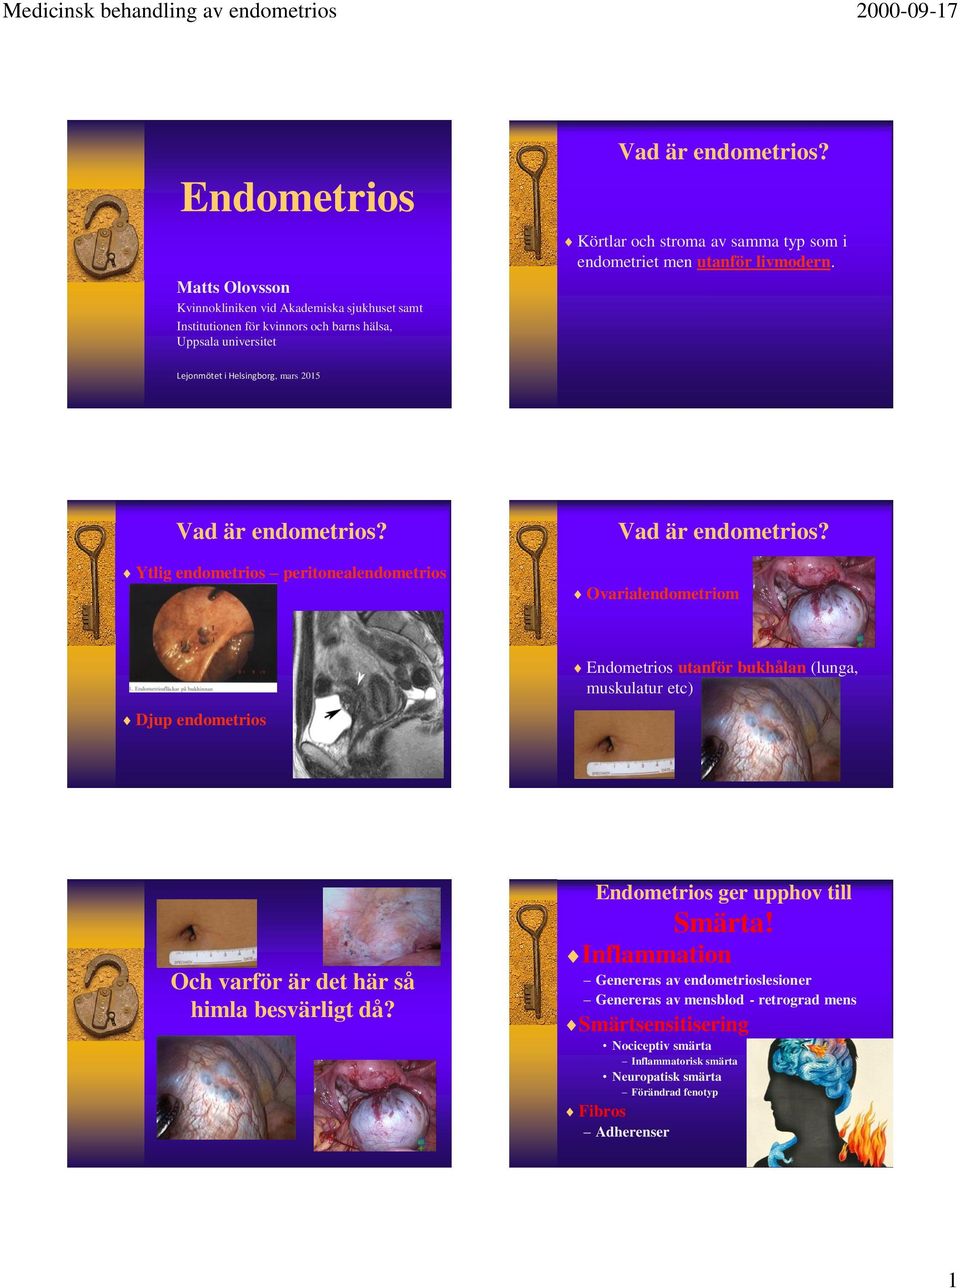 Ytlig endometrios peritonealendometrios Vad är endometrios?